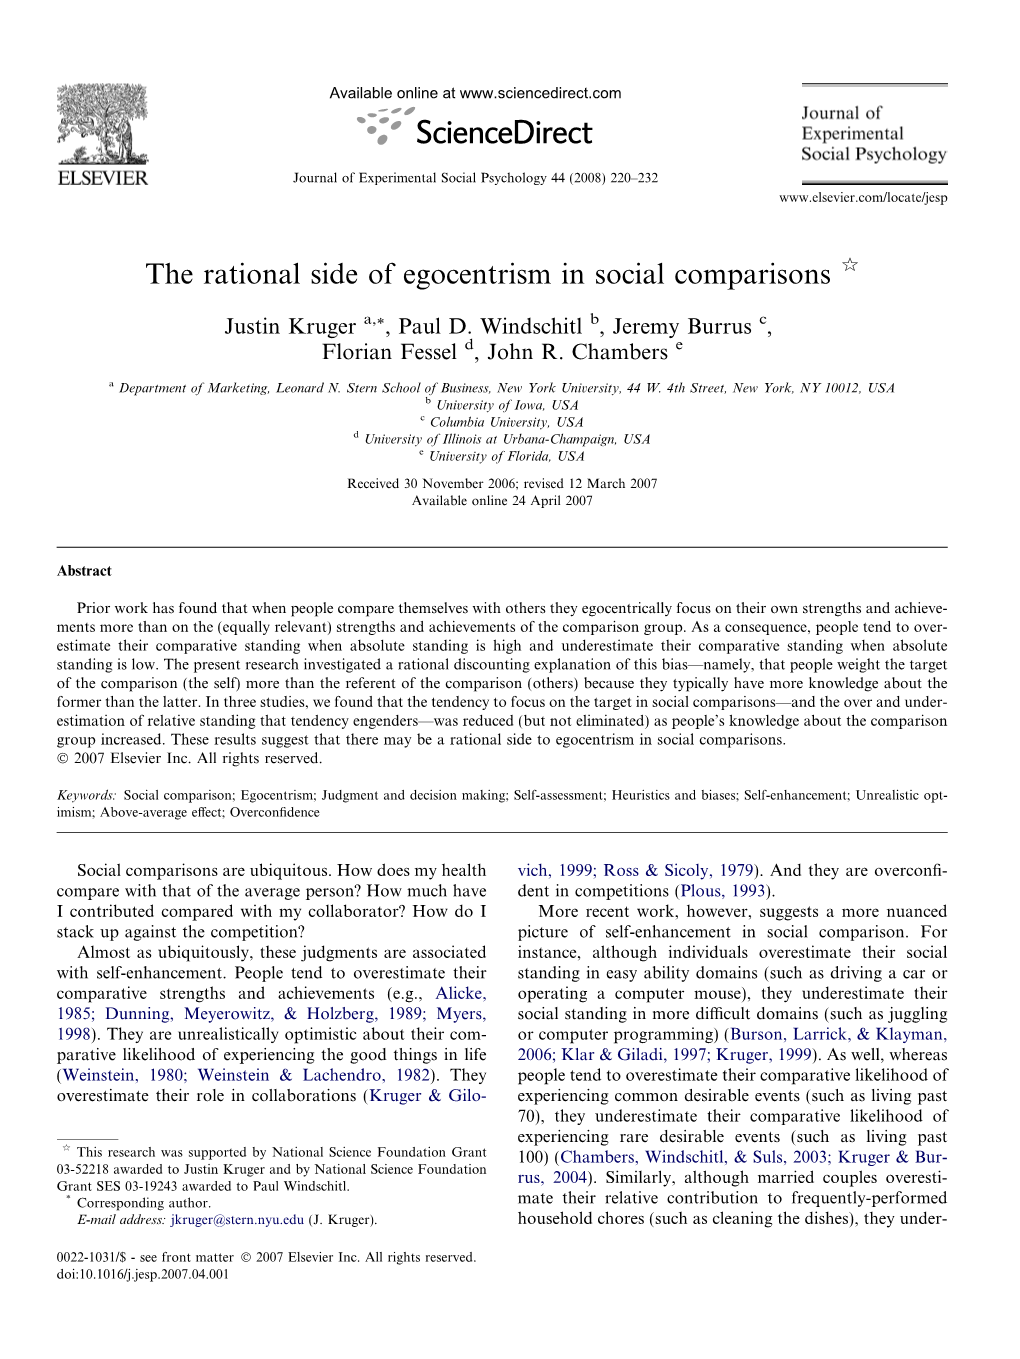 The Rational Side of Egocentrism in Social Comparisons Q